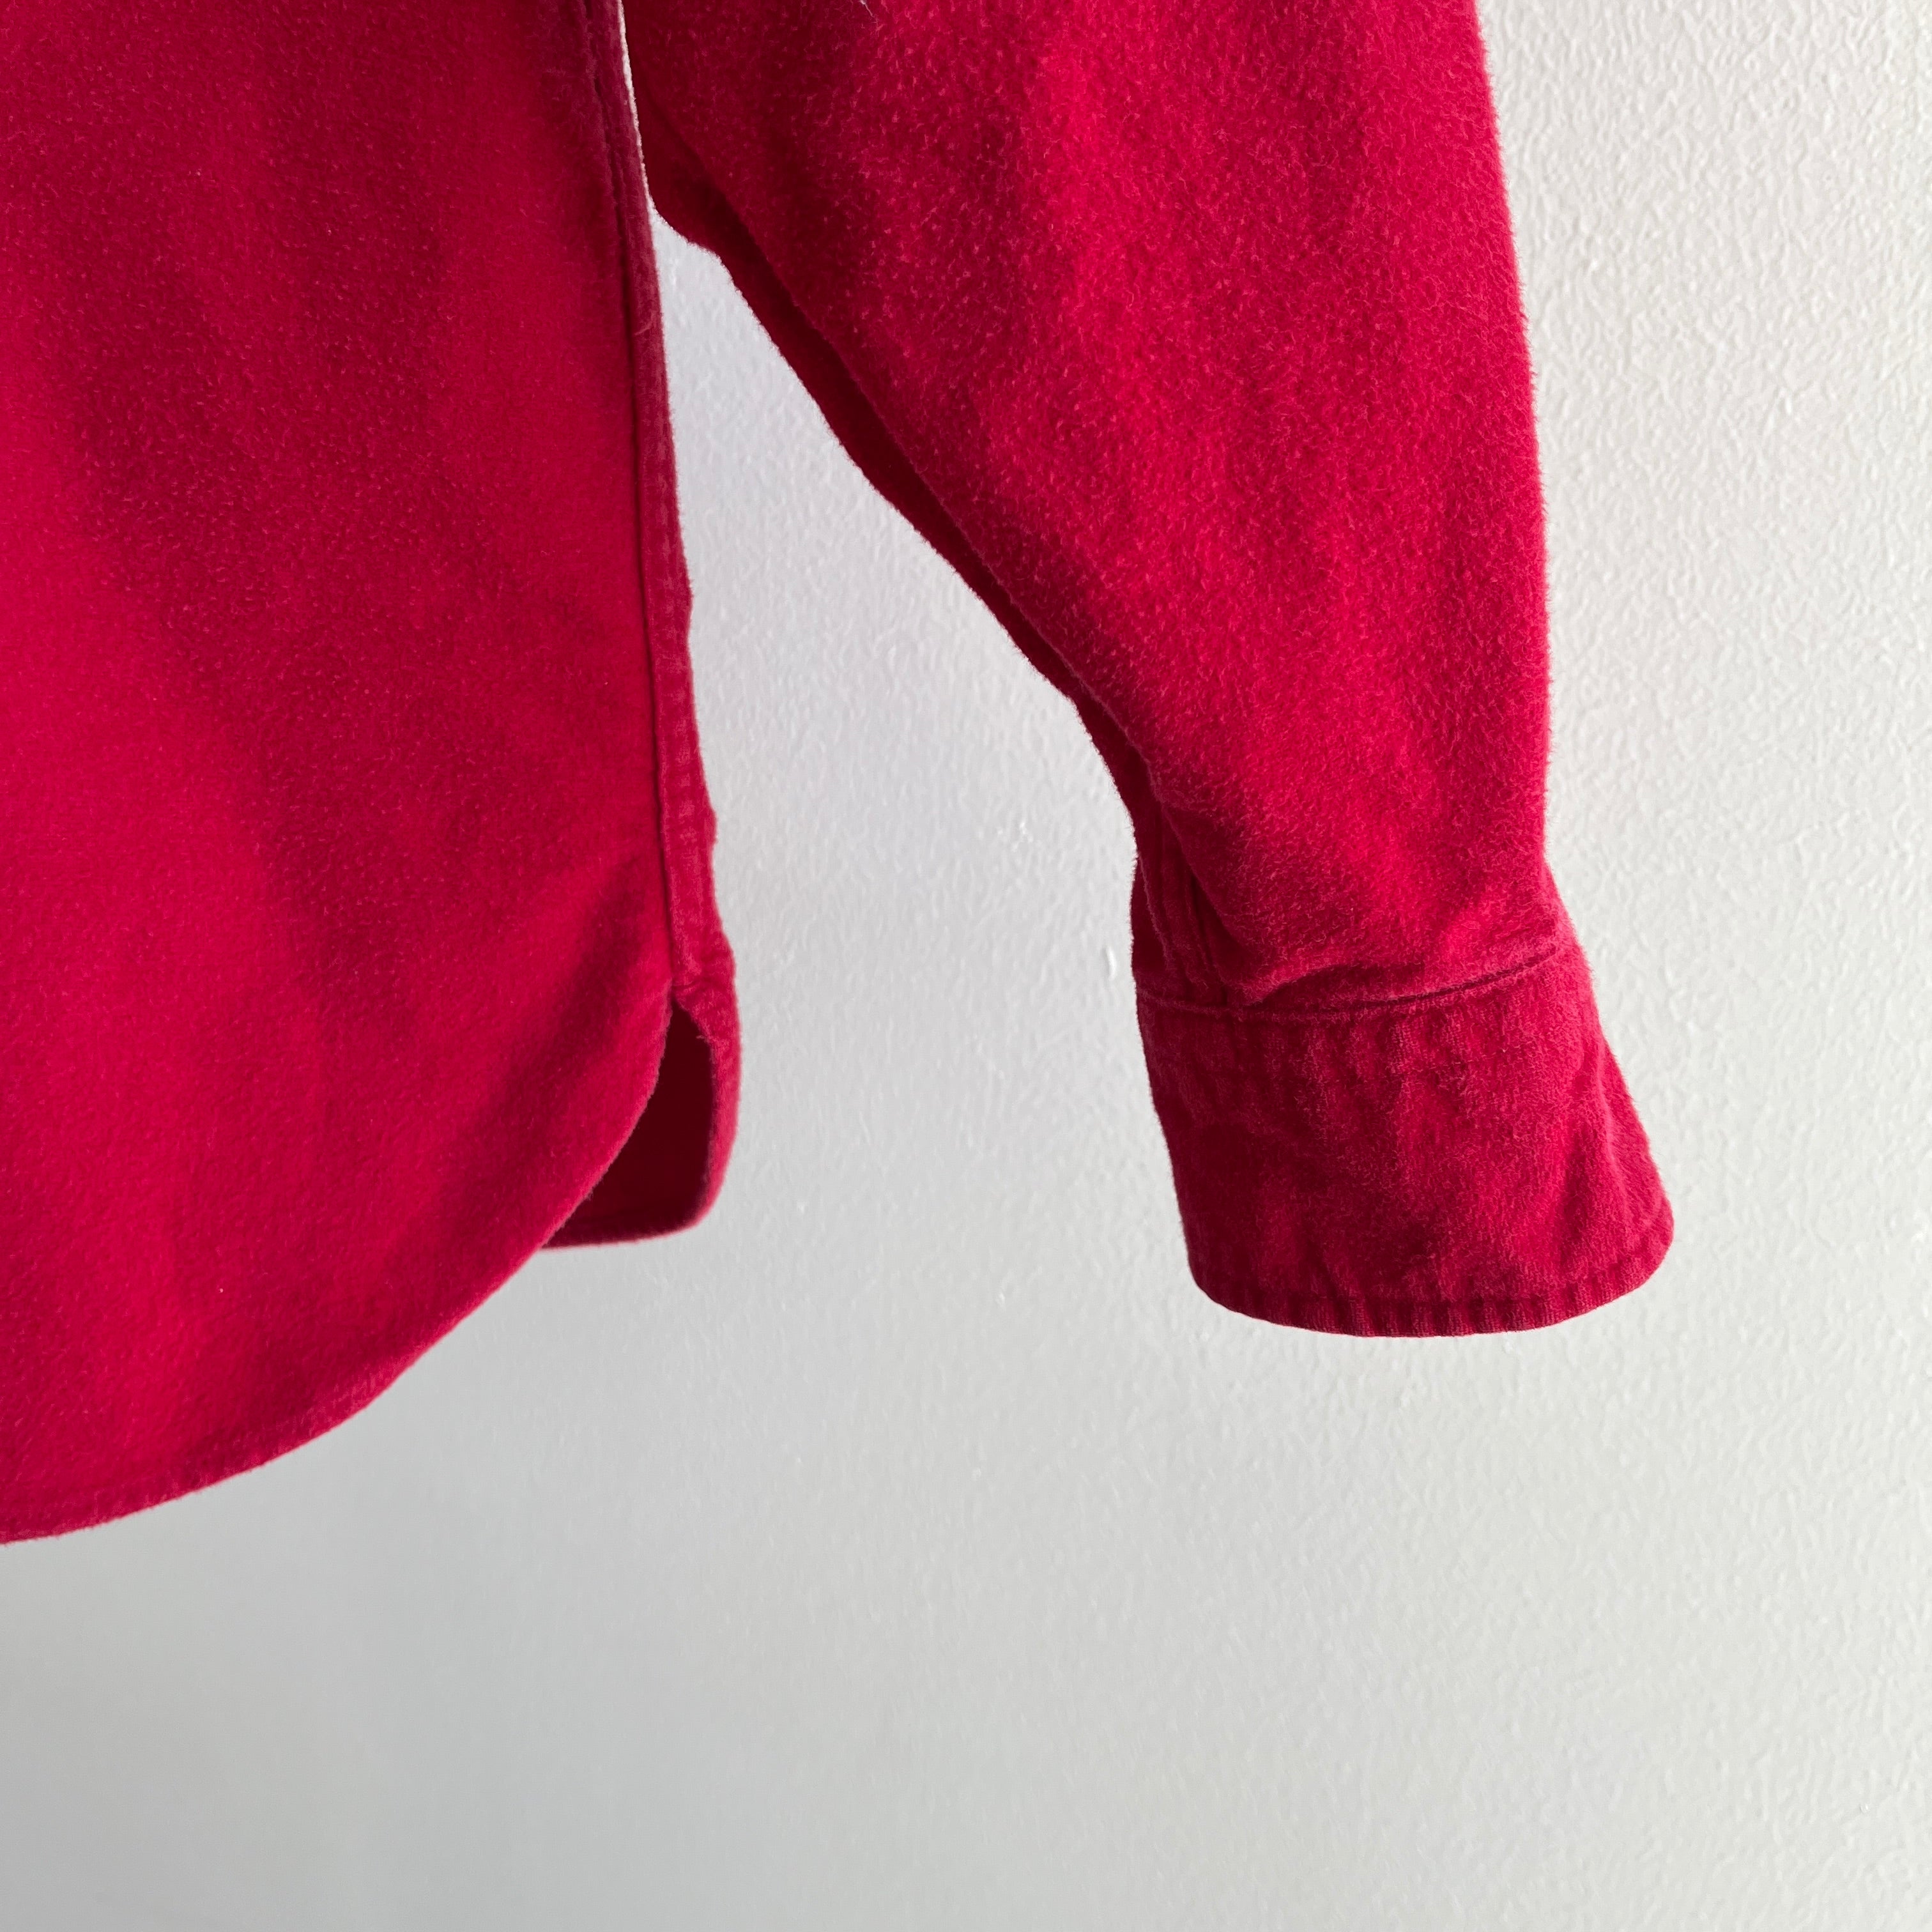 1990s L.L. Bean Deep Red Chamois Cotton Flannel Shirt